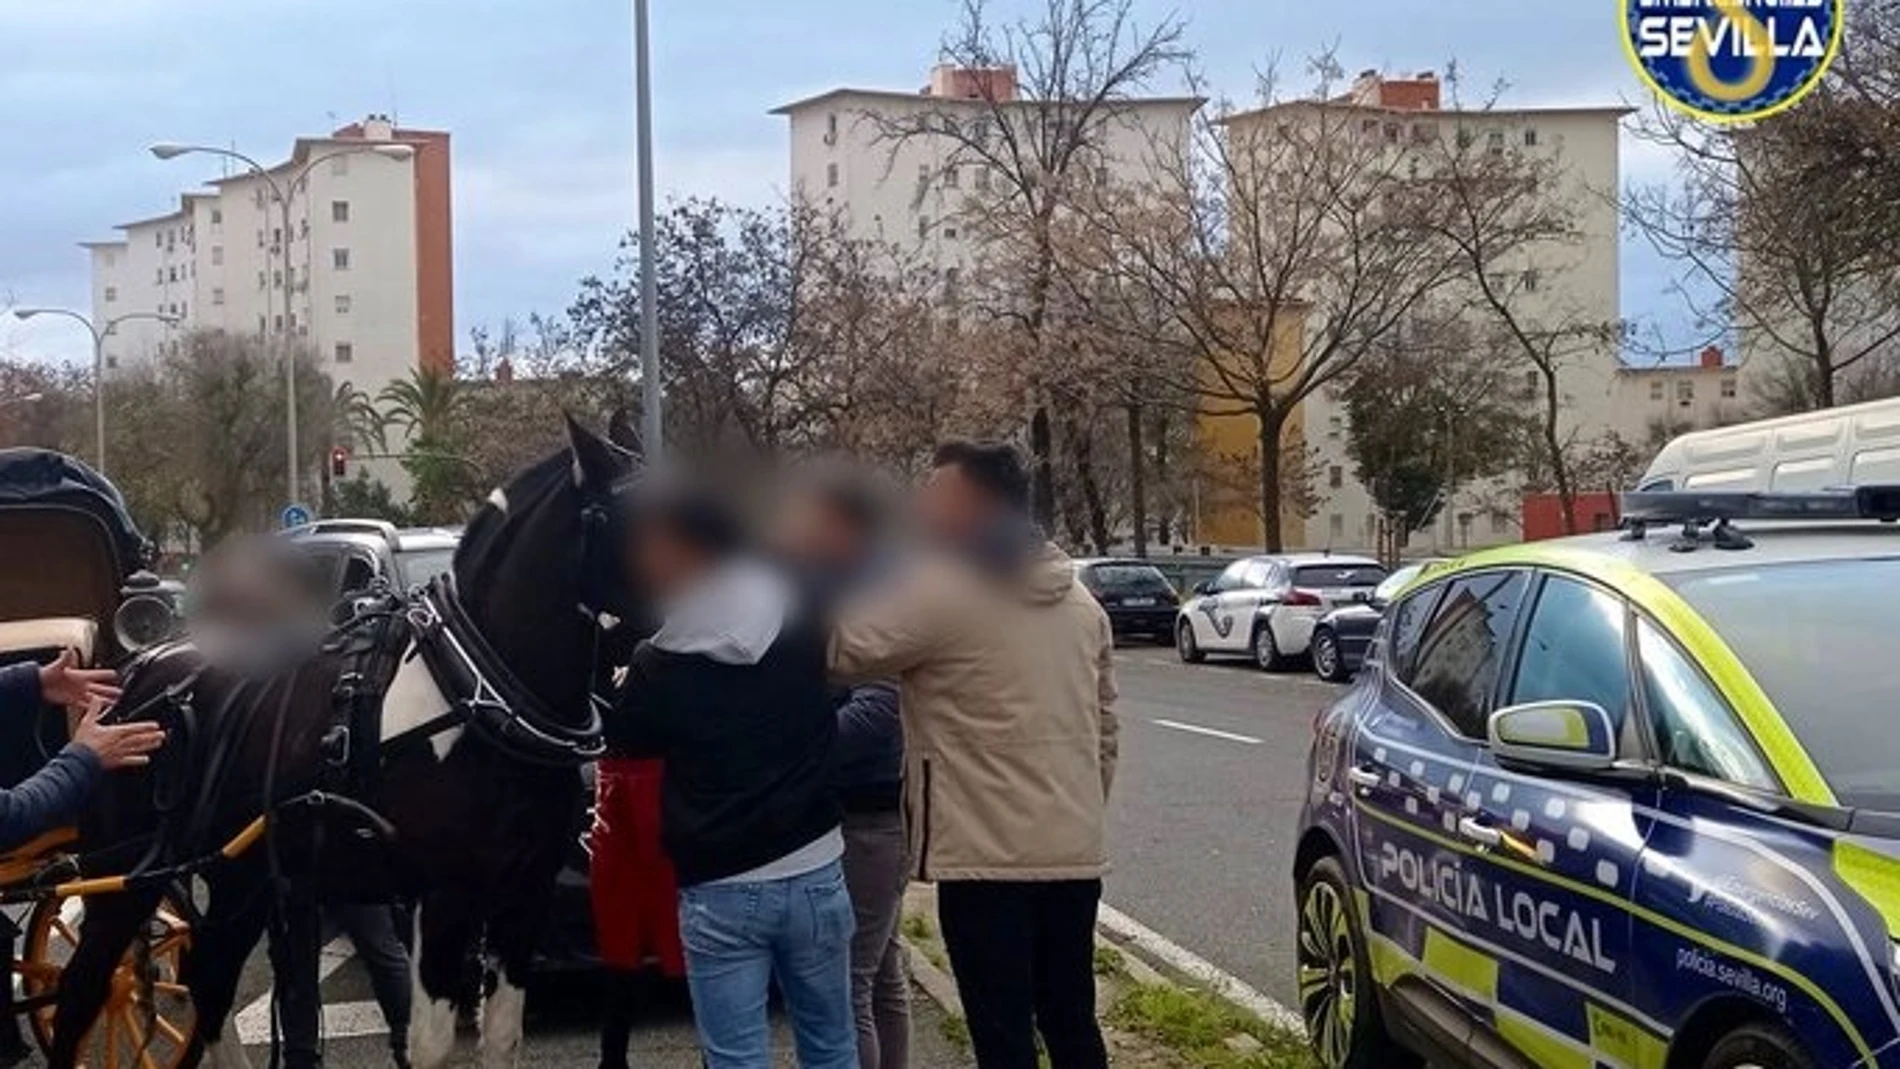 Intervención policial en Los Remedios tras desbocarse un caballo.EMERGENCIAS SEVILLA17/01/2023